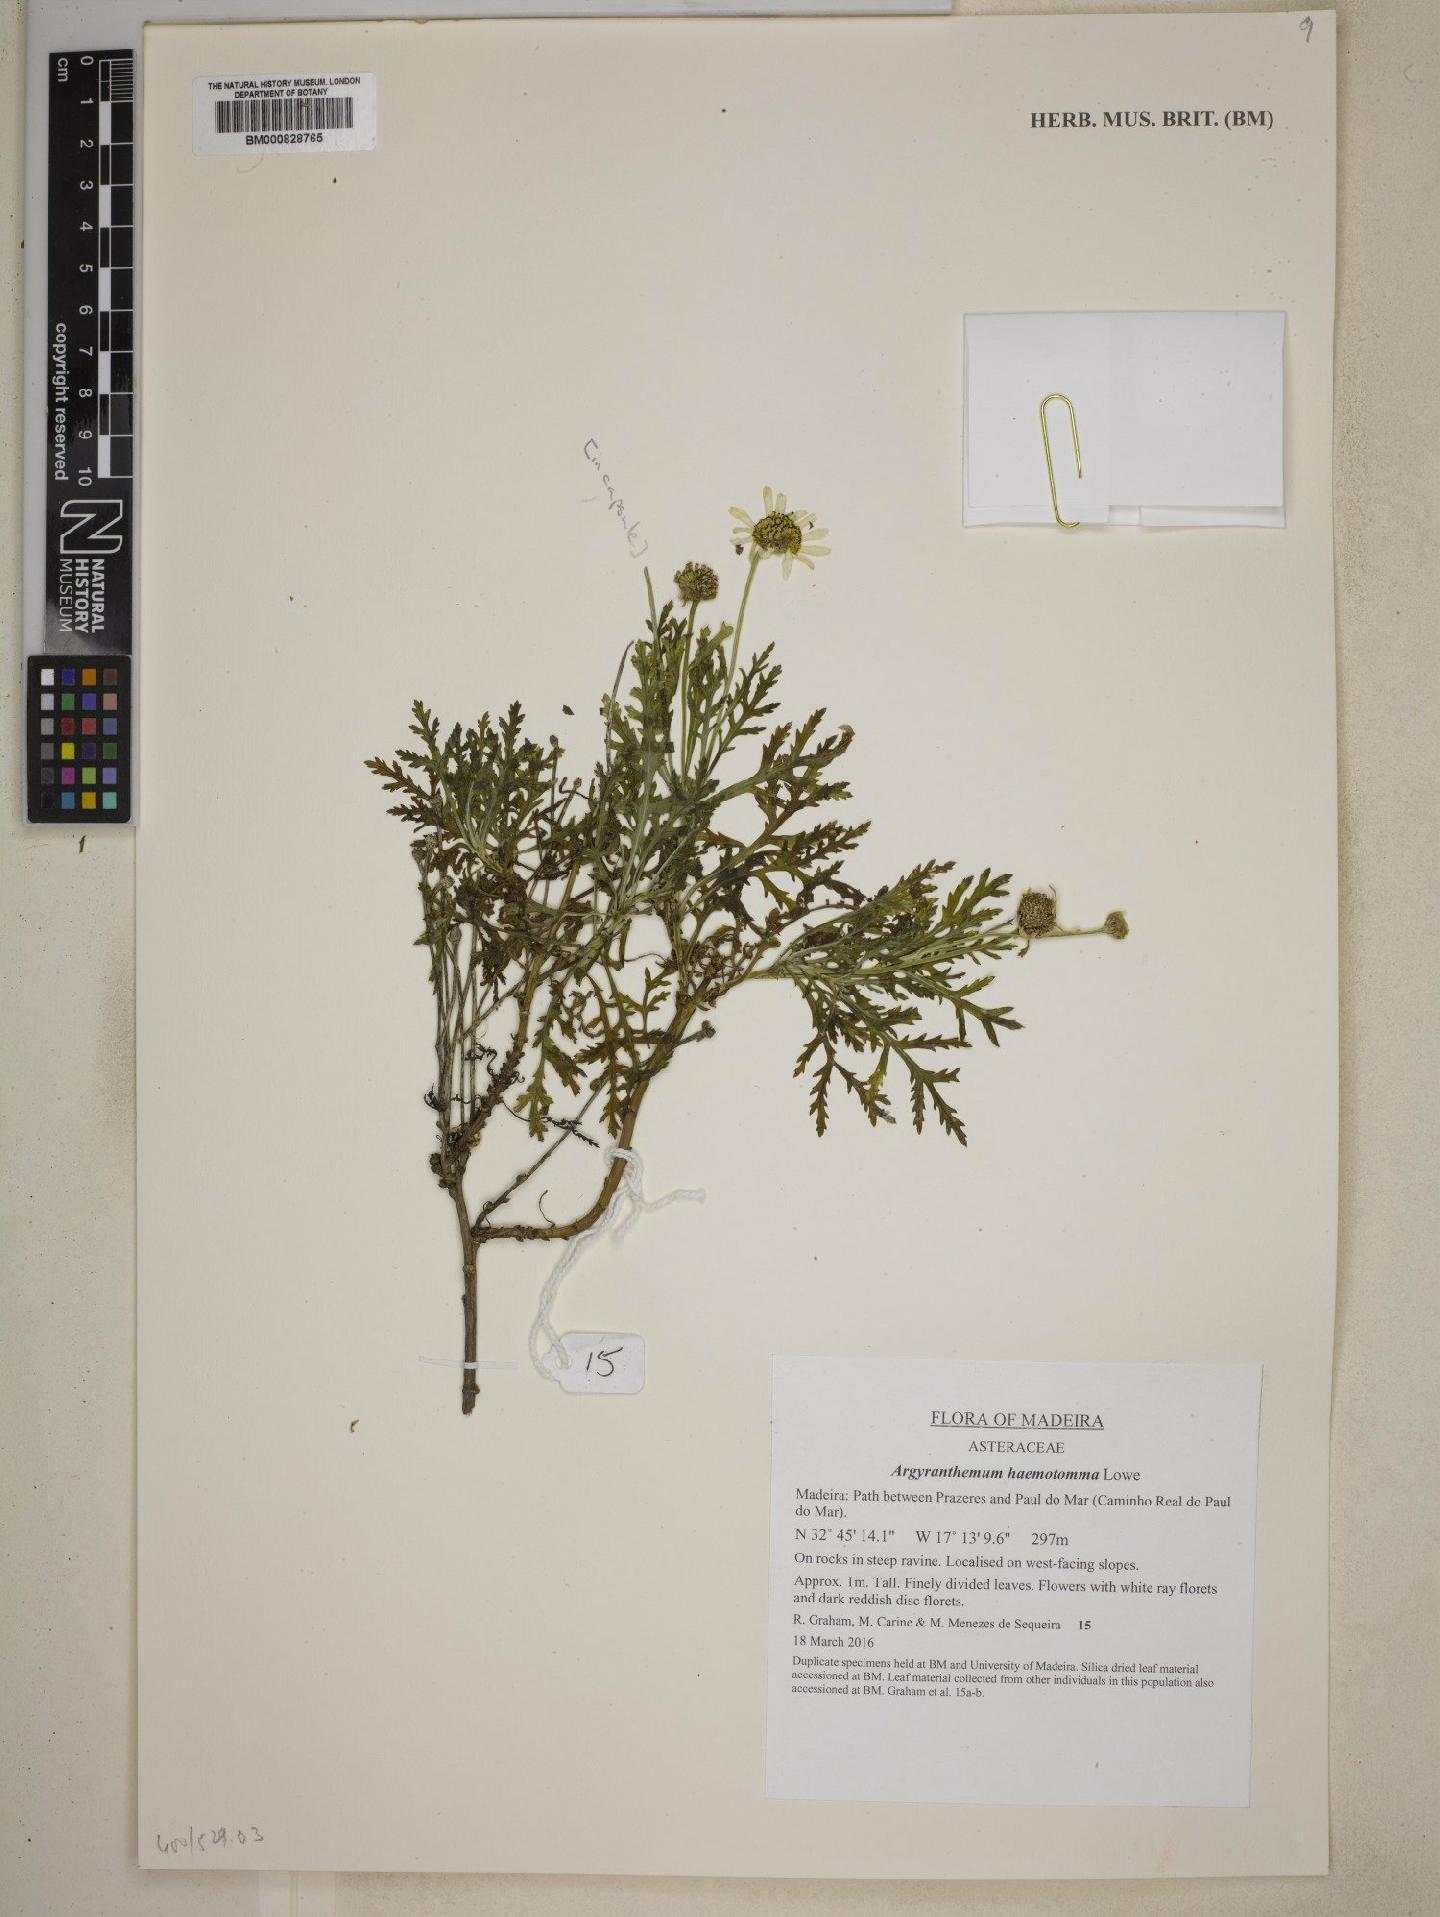 To NHMUK collection (Argyranthemum haematomma Lowe; NHMUK:ecatalogue:9073634)